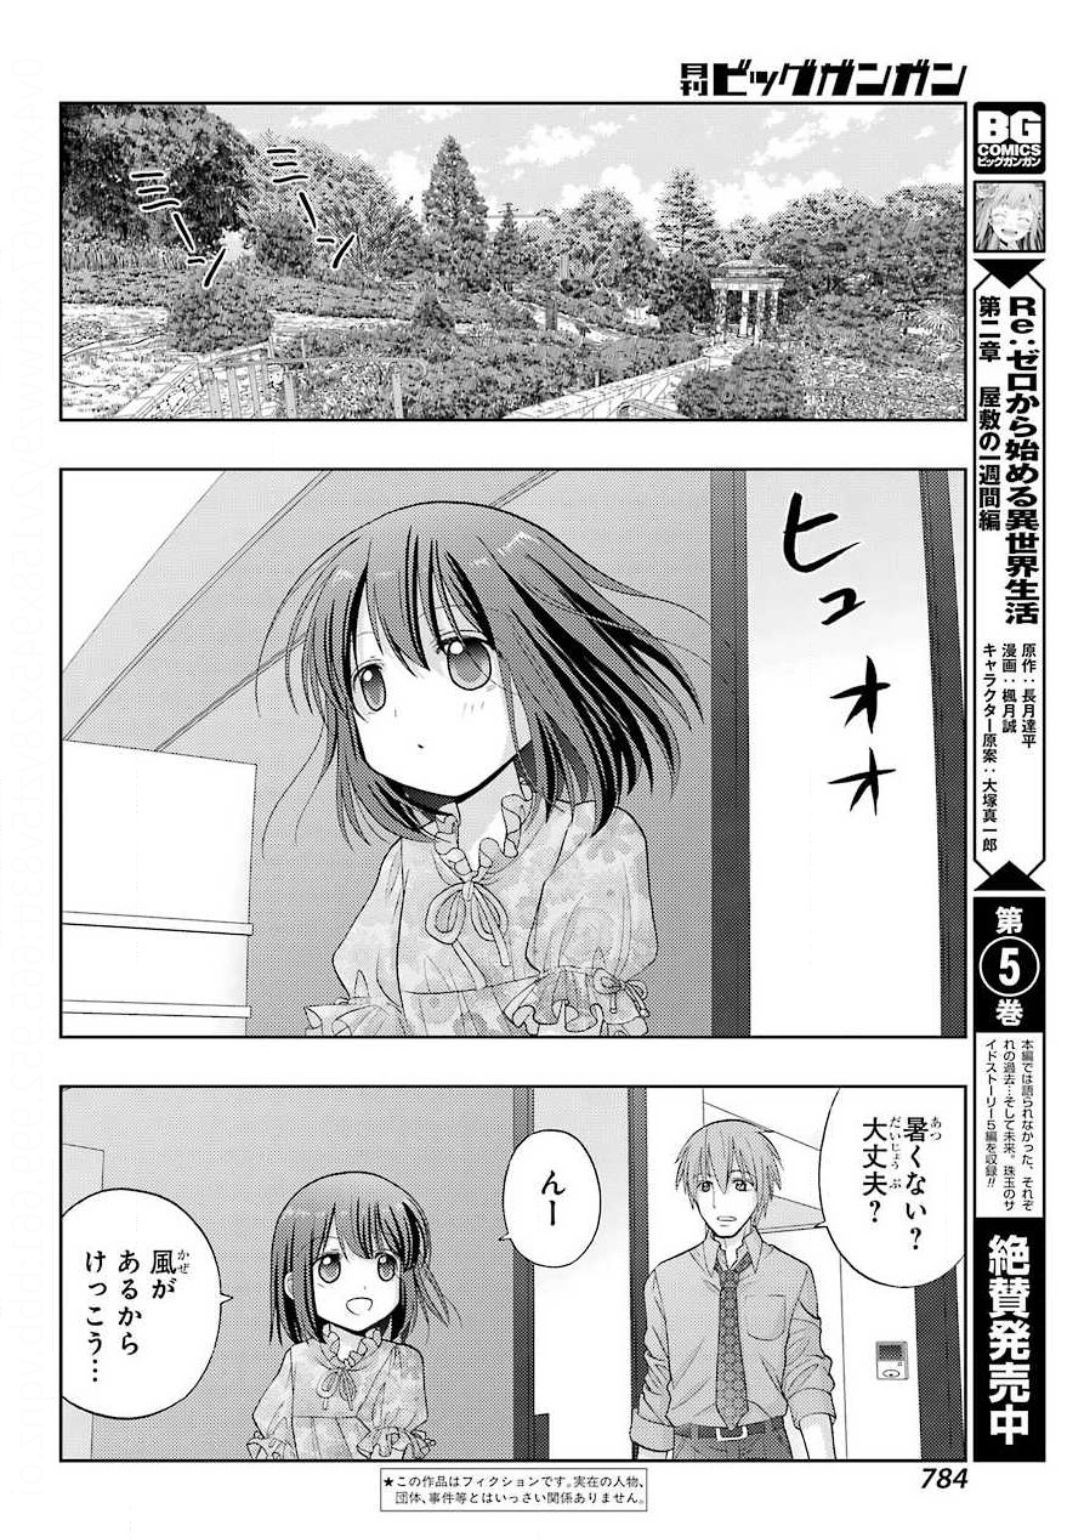 Shinohayu - The Dawn of Age Manga - Chapter 083 - Page 2